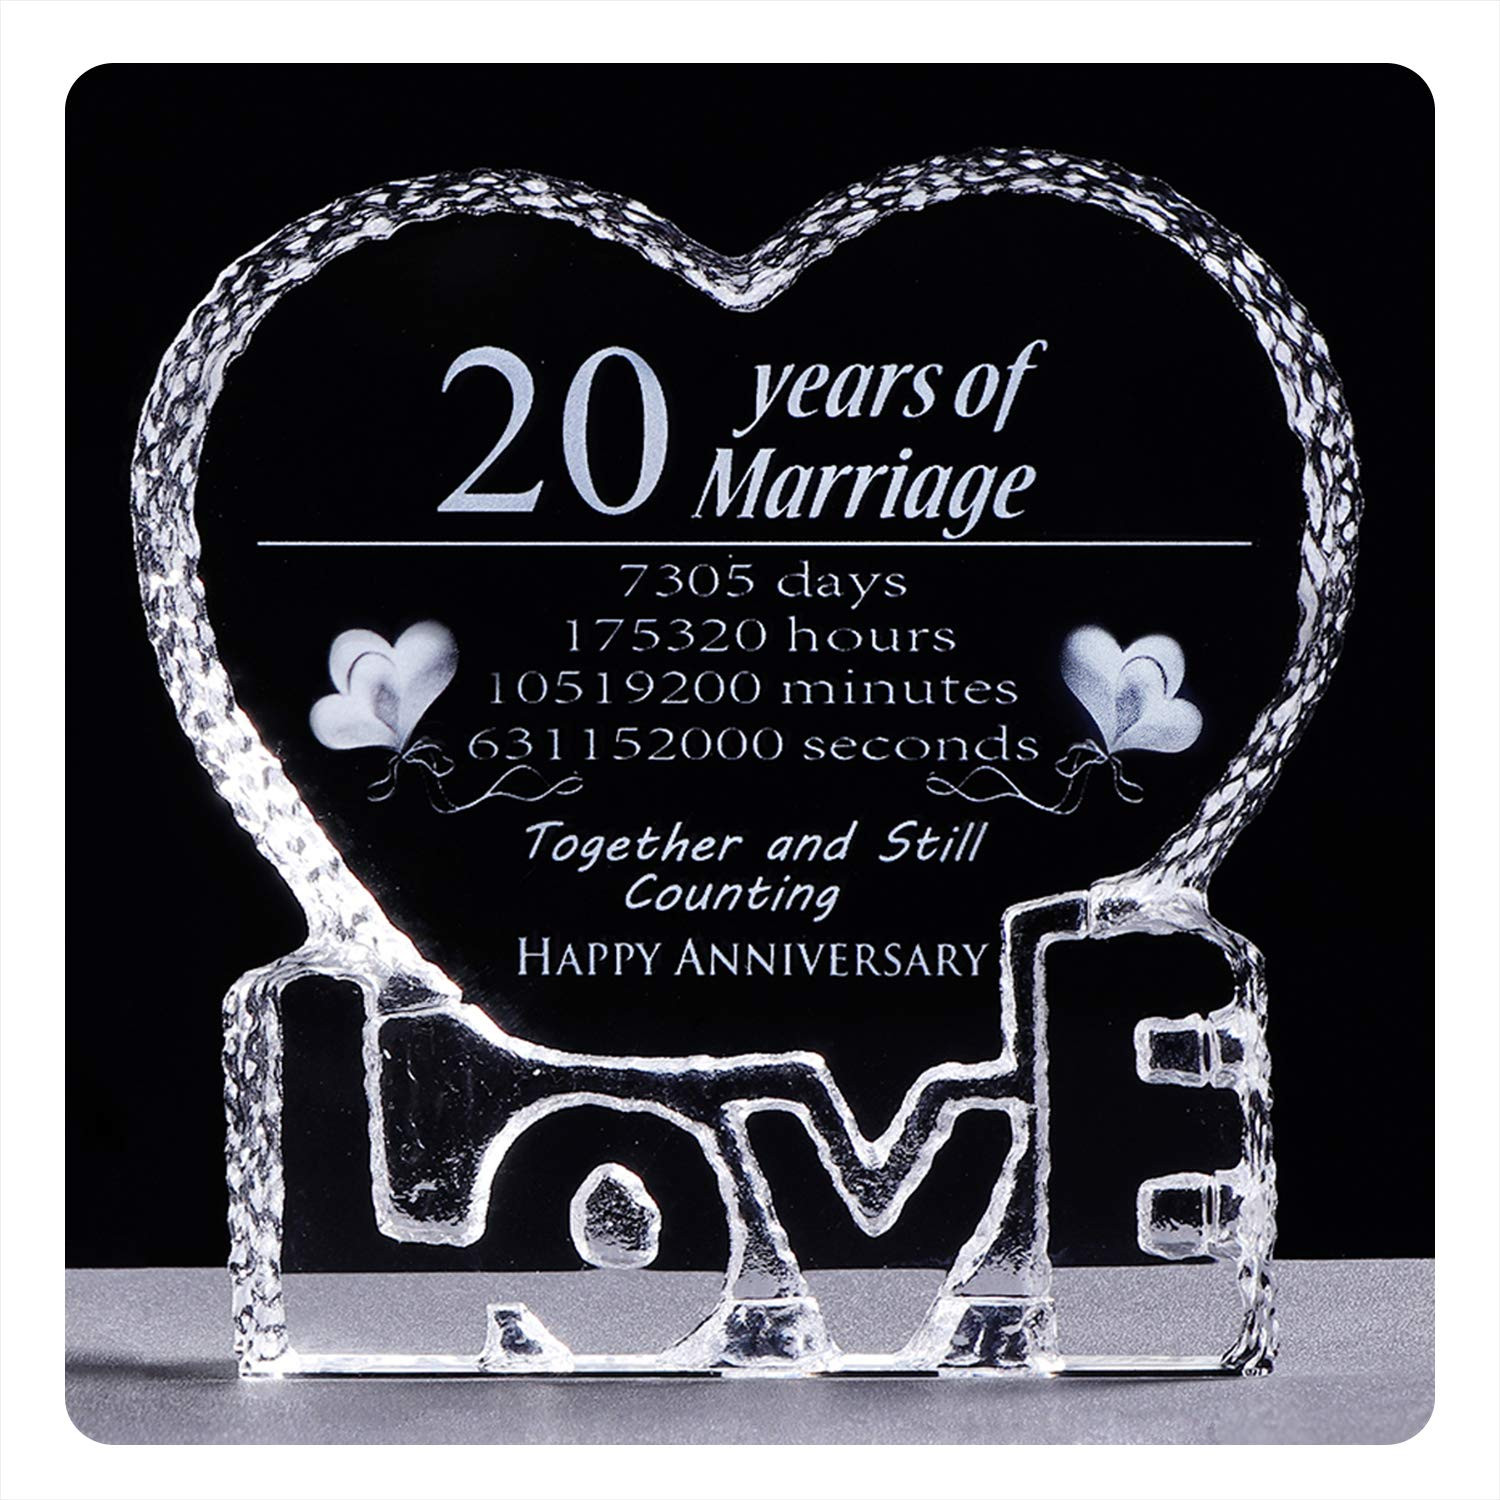 20Th Wedding Anniversary Gift Ideas
 34 Genius 20Th Wedding Anniversary Gift Ideas For Husband